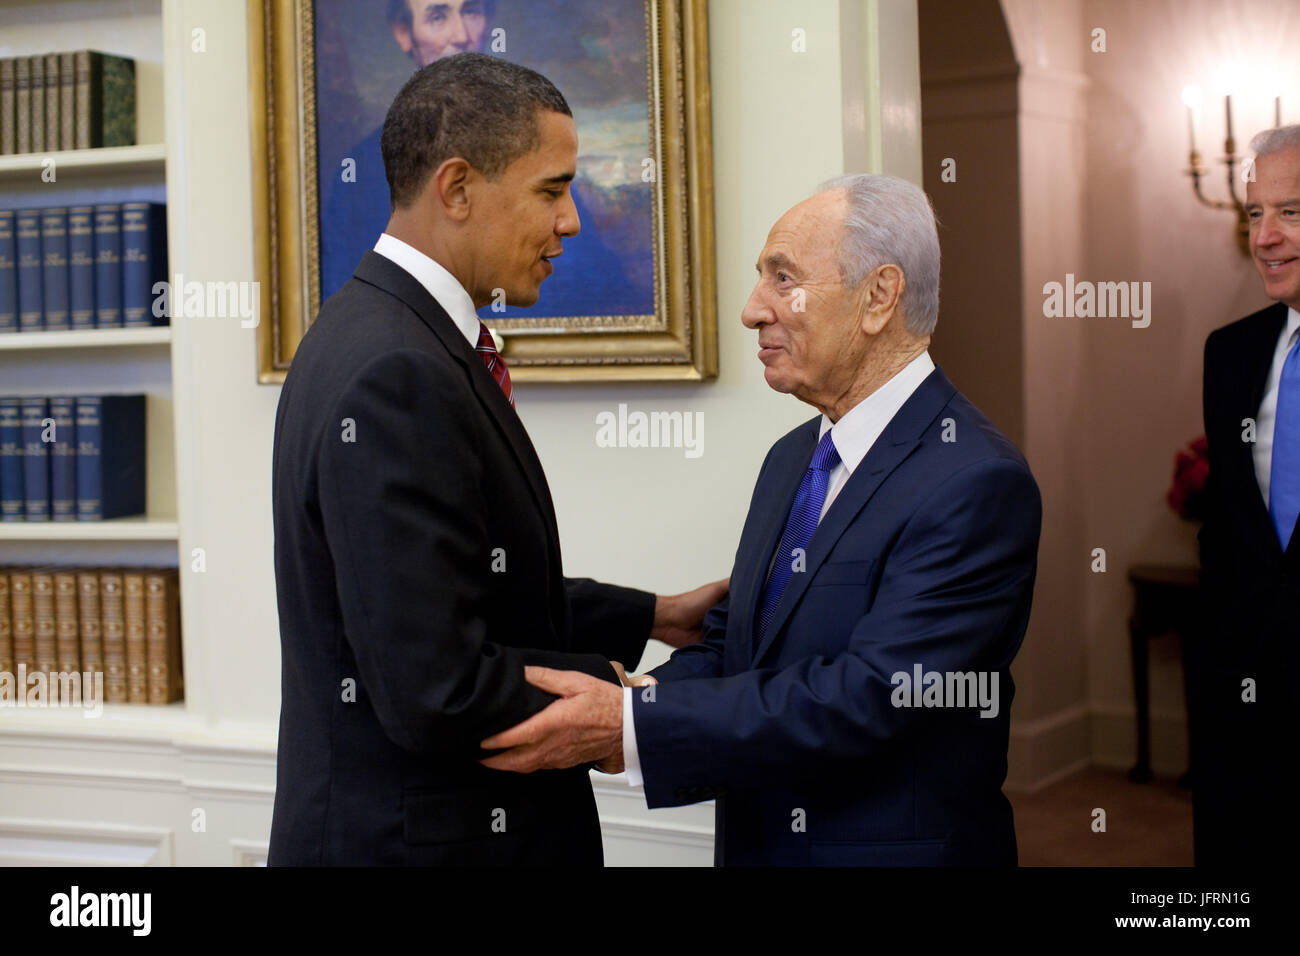 Präsident Barack Obama begrüßt israelischen Präsidenten Shimon Peres im Oval Office Dienstag, 5. Mai 2009.  Rechts ist Vize-Präsident Joe Biden.  Offiziellen White House Photo by Pete Souza Stockfoto